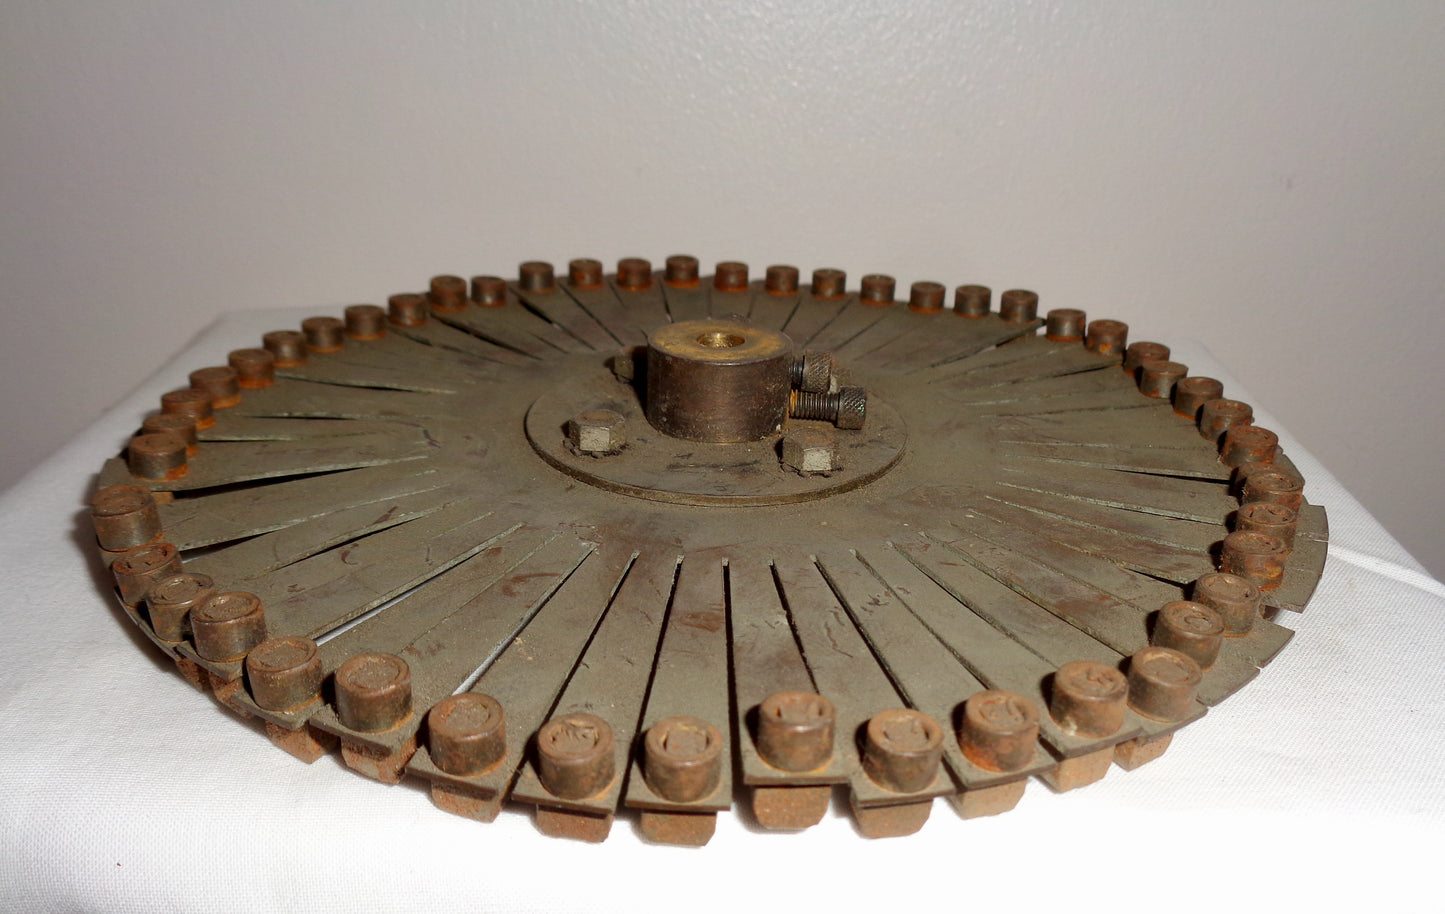 Vintage Telegraphy Uniselector Wheel